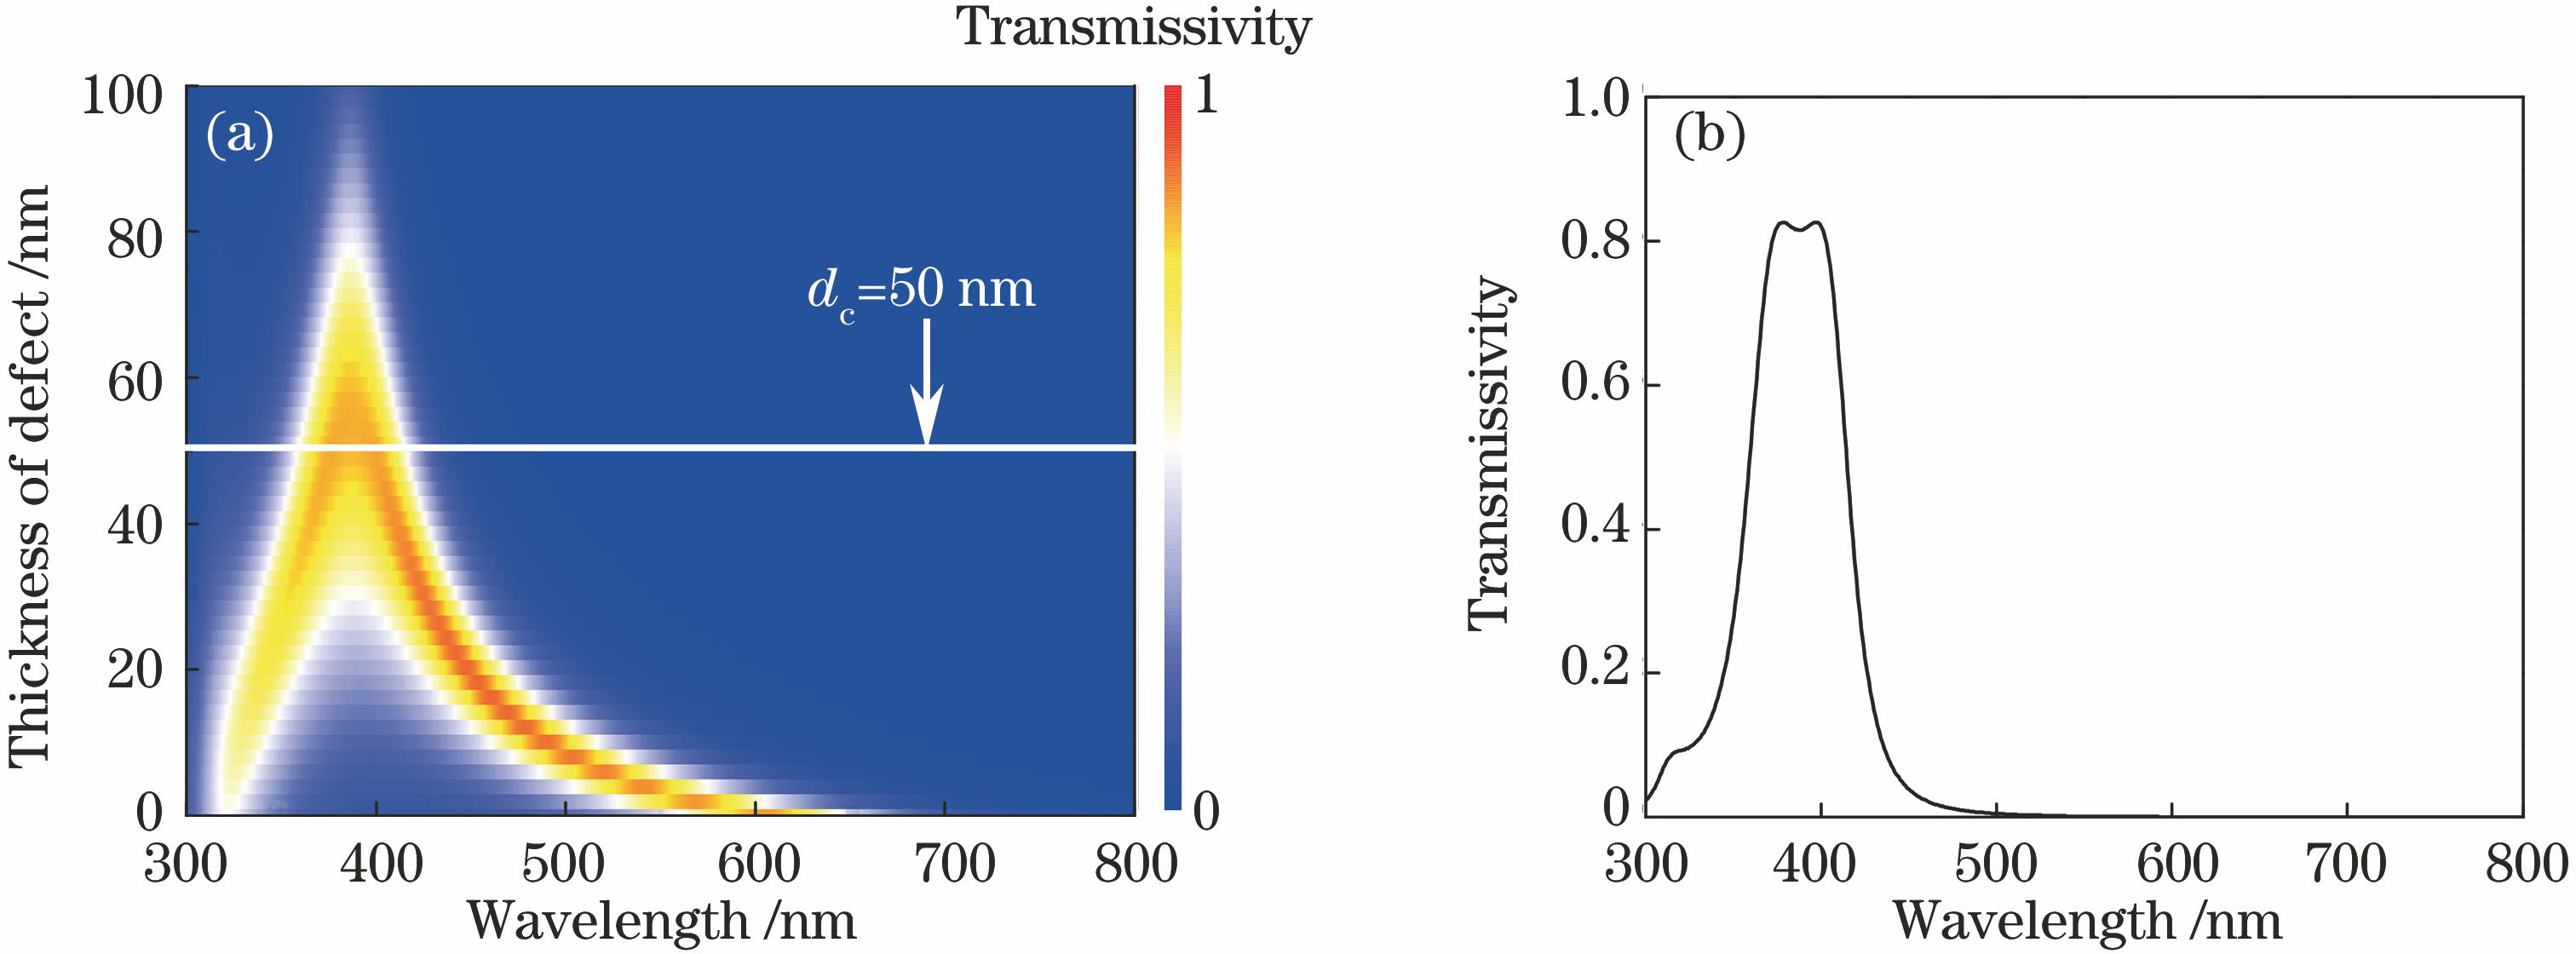 (a) Transmissivity distribution; (b) transmission spectrum at dc=50 nm